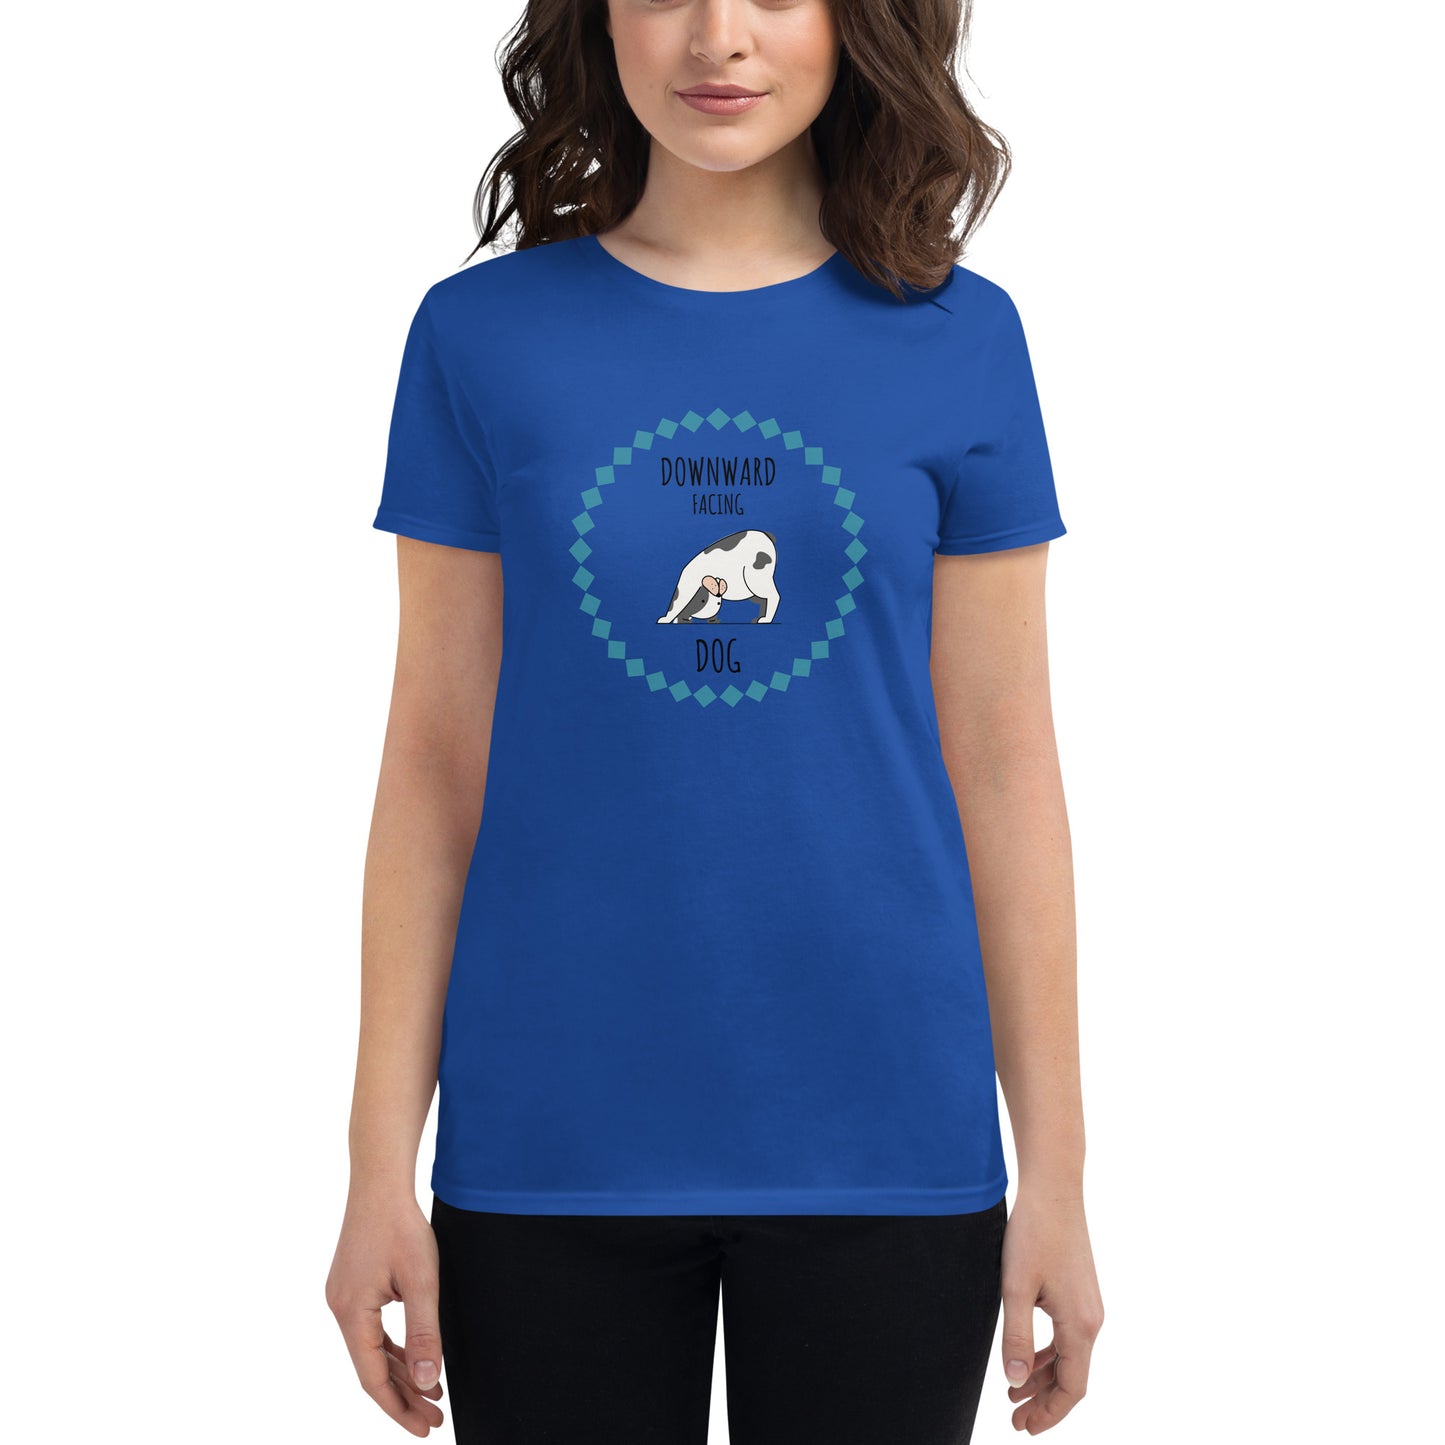 Yoga Dog Dog Mom Shirt - Women's Short-Sleeve T-Shirt